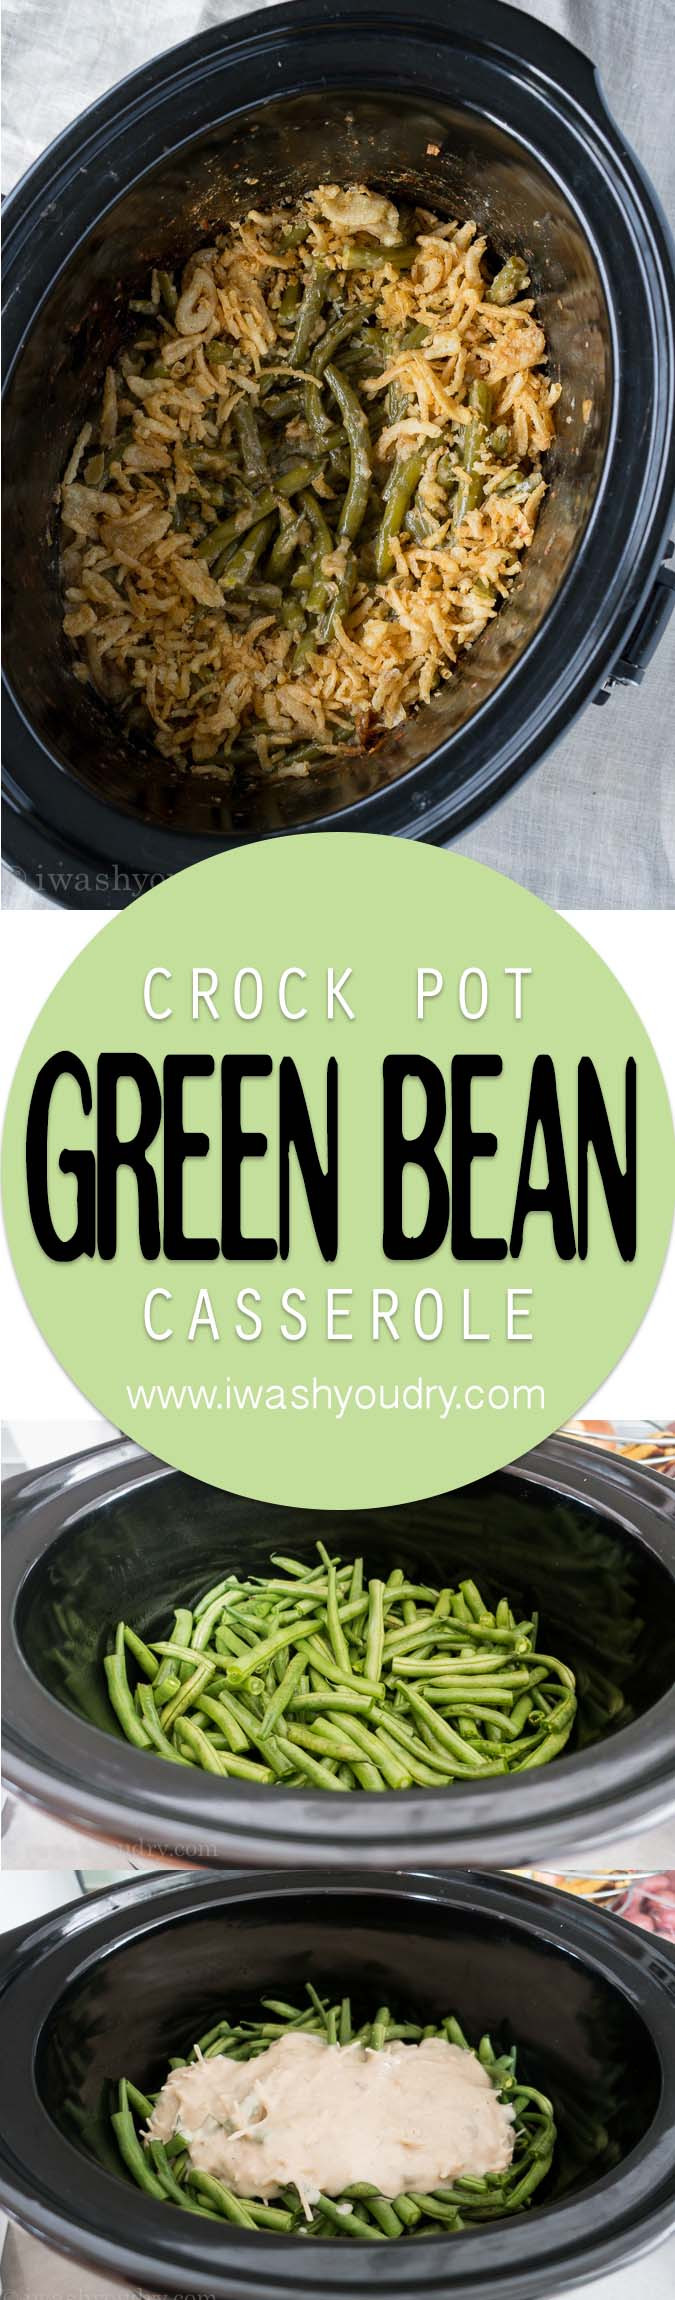 Green Bean Casserole In Crock Pot
 Crock Pot Green Bean Casserole I Wash You Dry